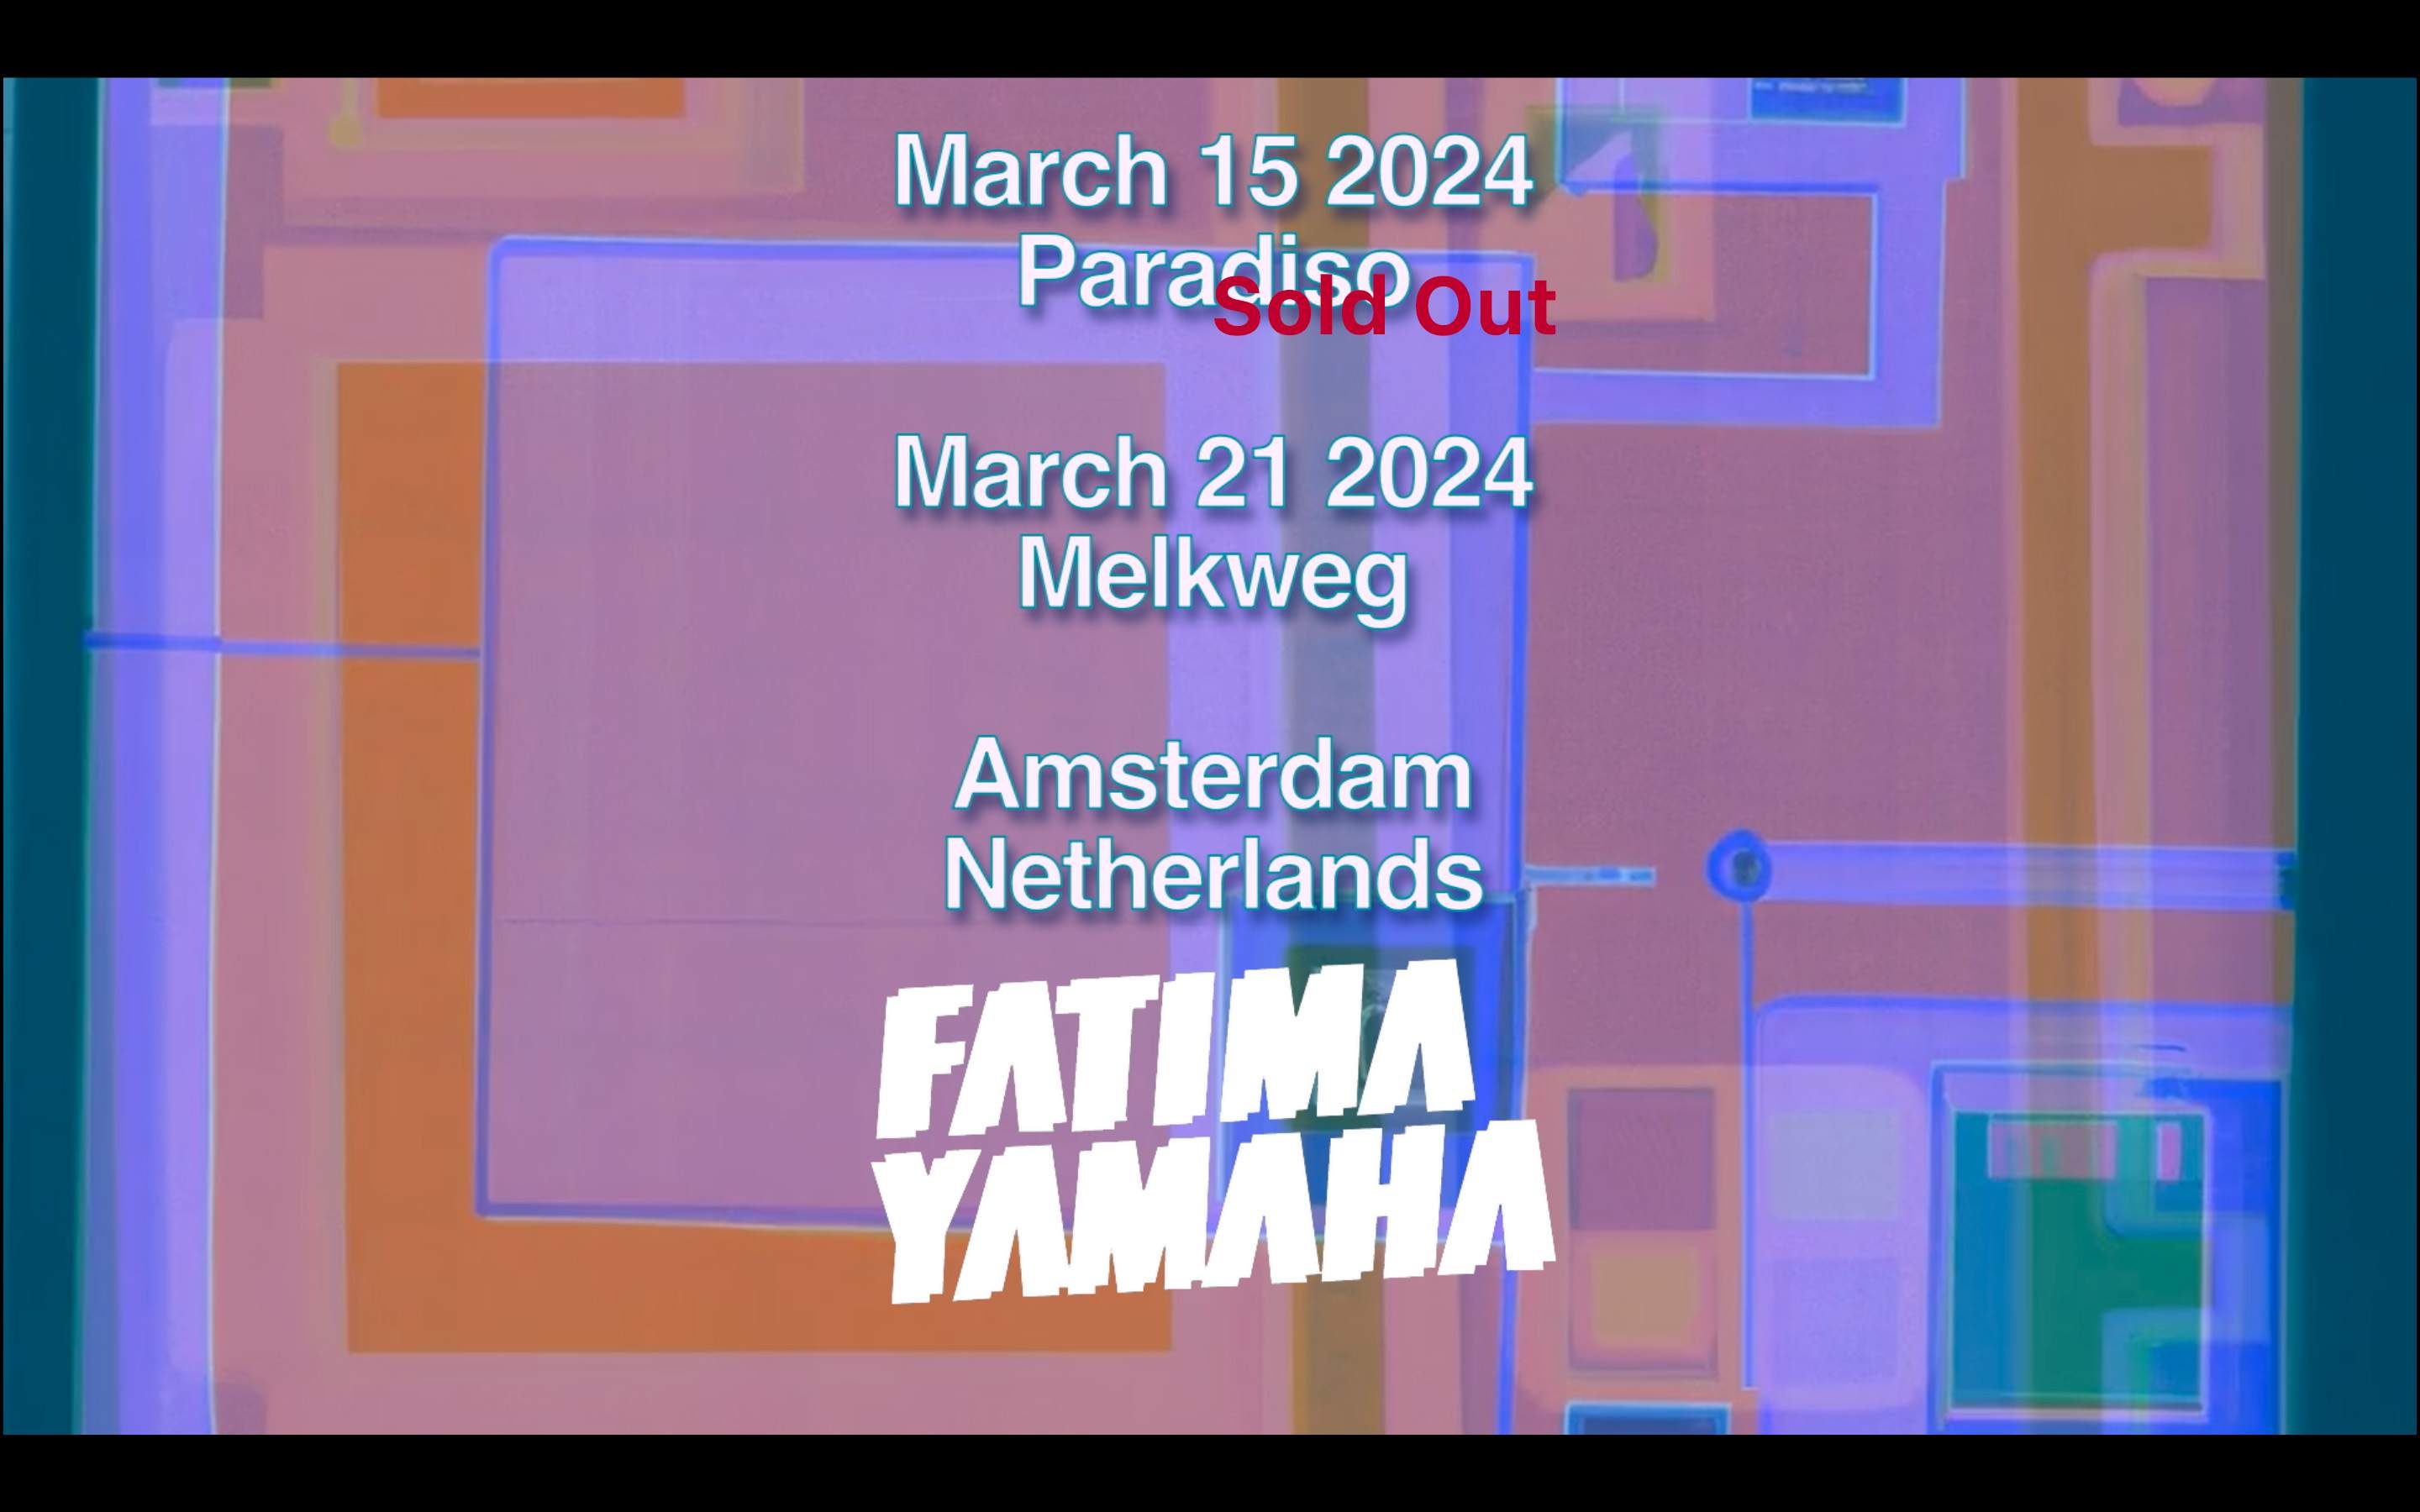 Fatima Yamaha (Live) - Amsterdam - フライヤー表